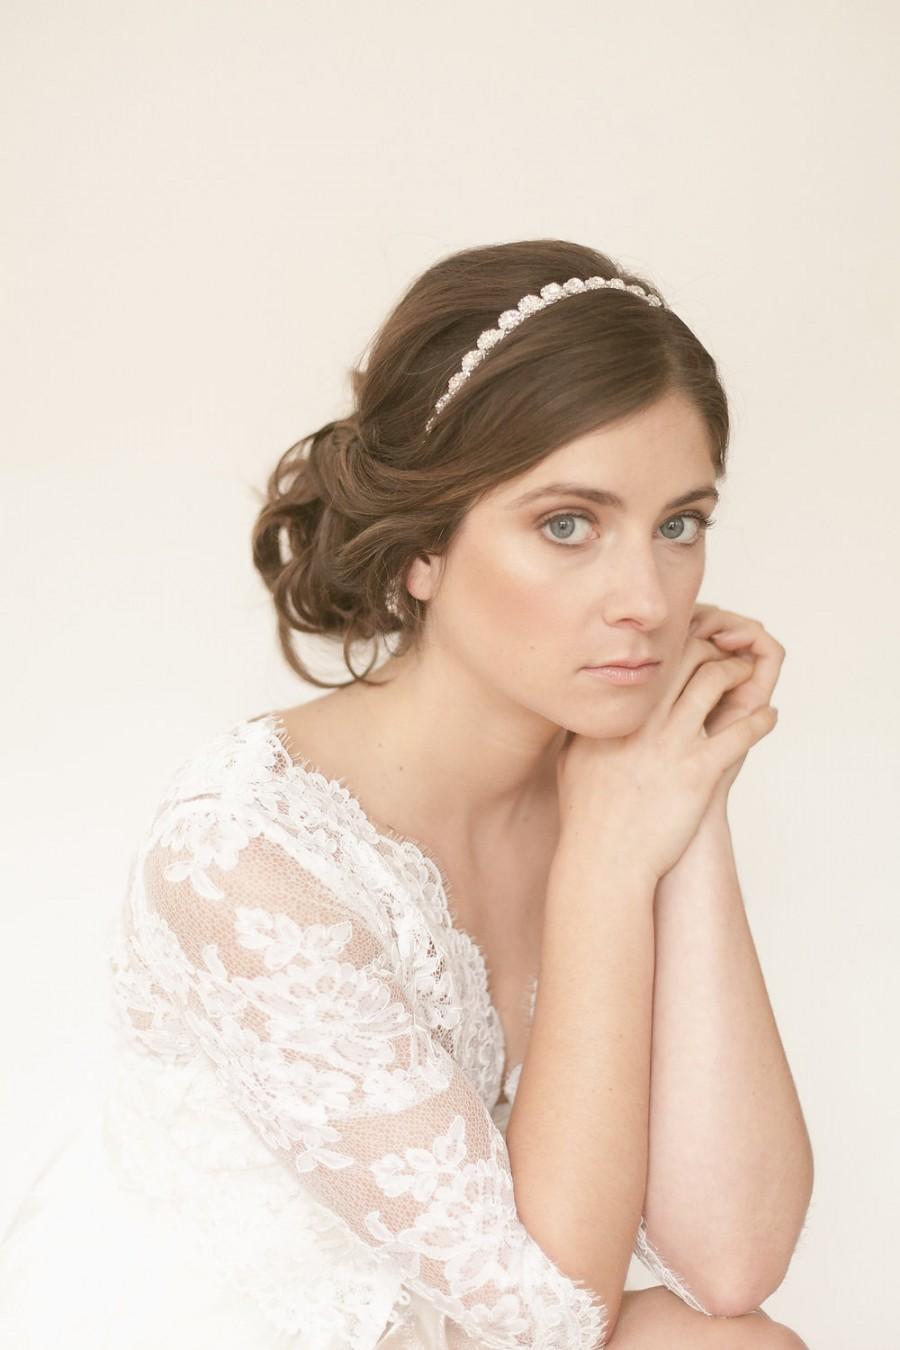 Wedding - White Diamond - G. Rhinestone filled crystal diamond sparkling dazzling gem stone halo headband sash wedding bridal headpiece comb hair